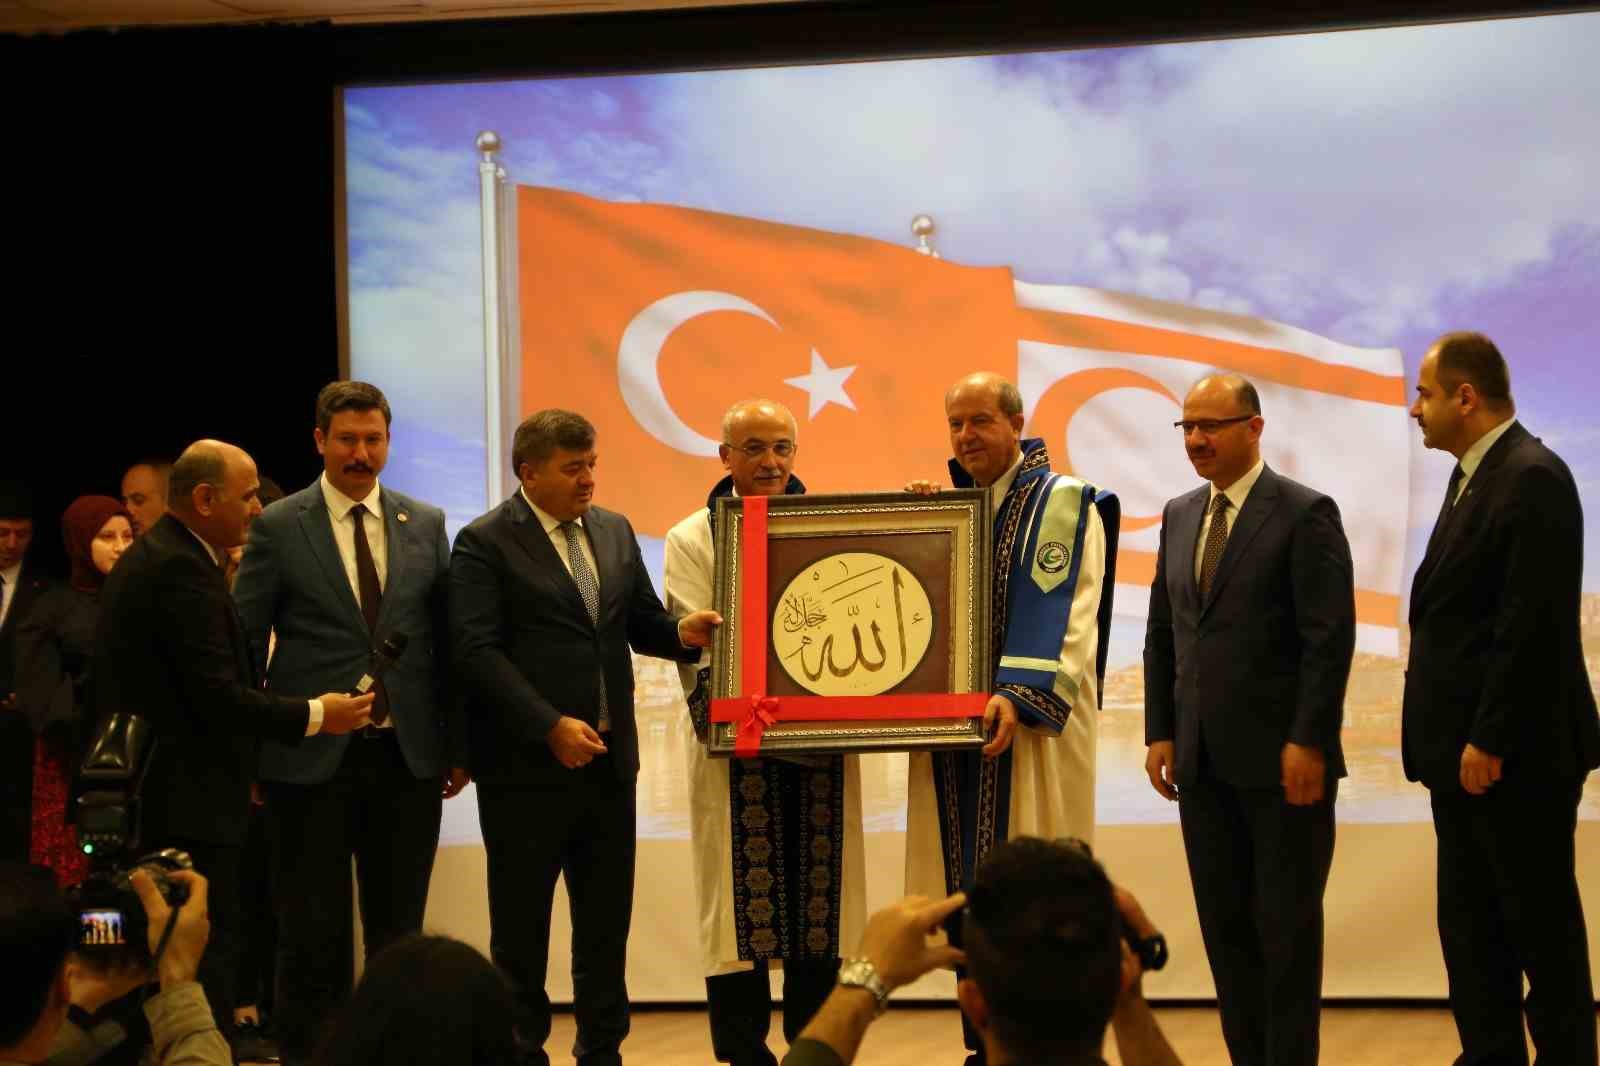 KKTC Cumhurbaşkanı Ersin Tatar’a fahri doktora ünvanı verildi